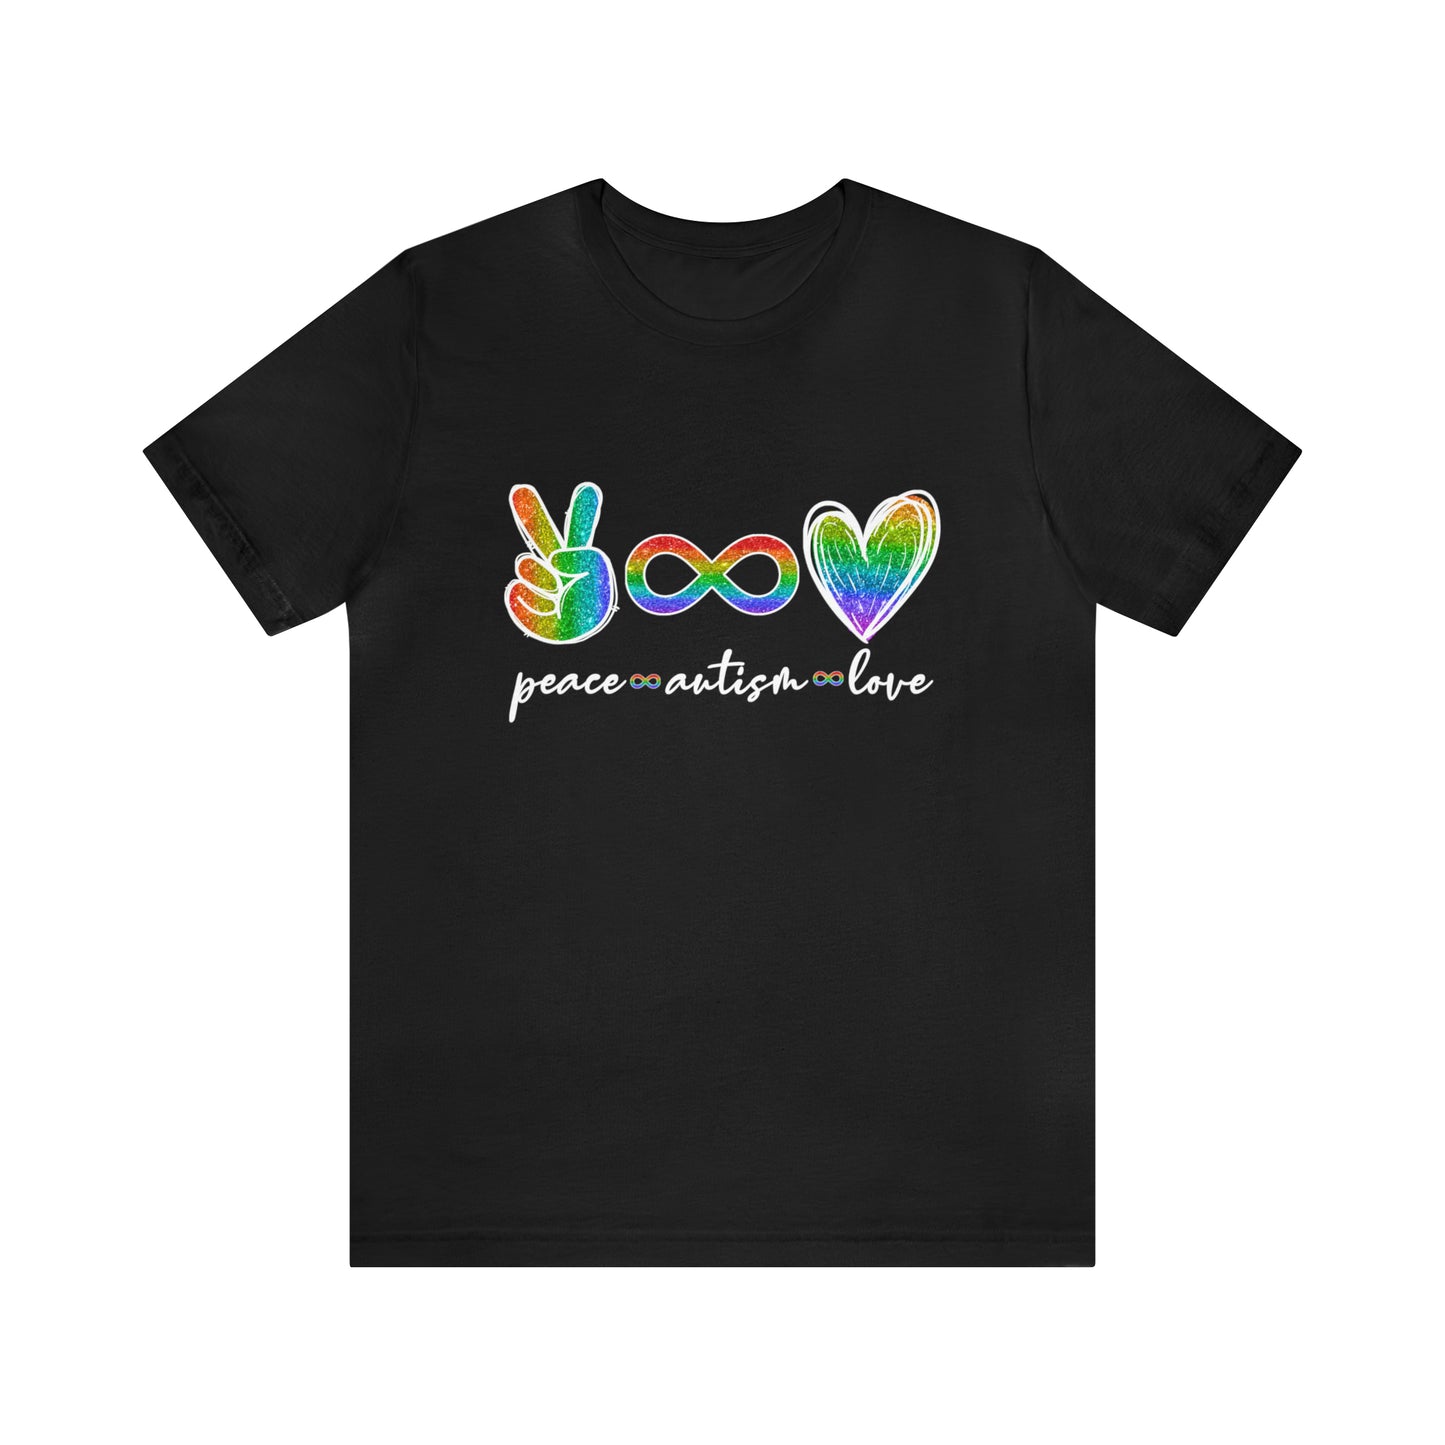 Peace, Autism & Love T-Shirt - Adult